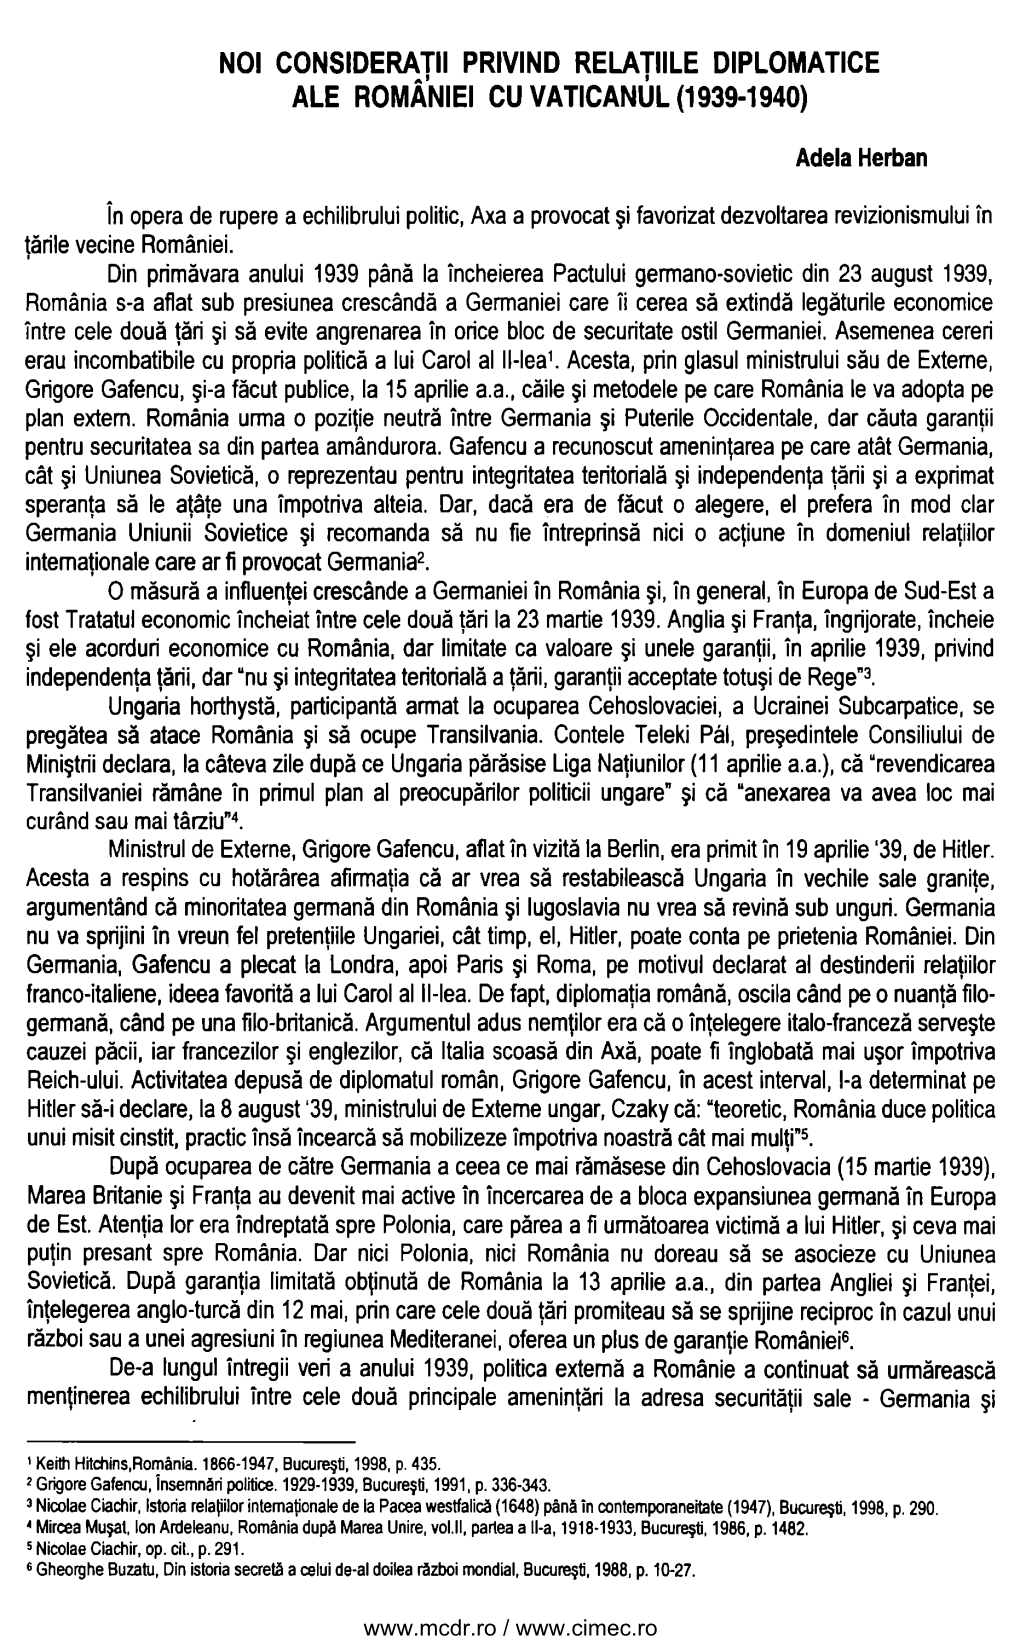 NOI CONSIDERATU PRIVIND Relatllle DIPLOMATICE ALE ROMANIEI CU VATICANUL (1939-1940)